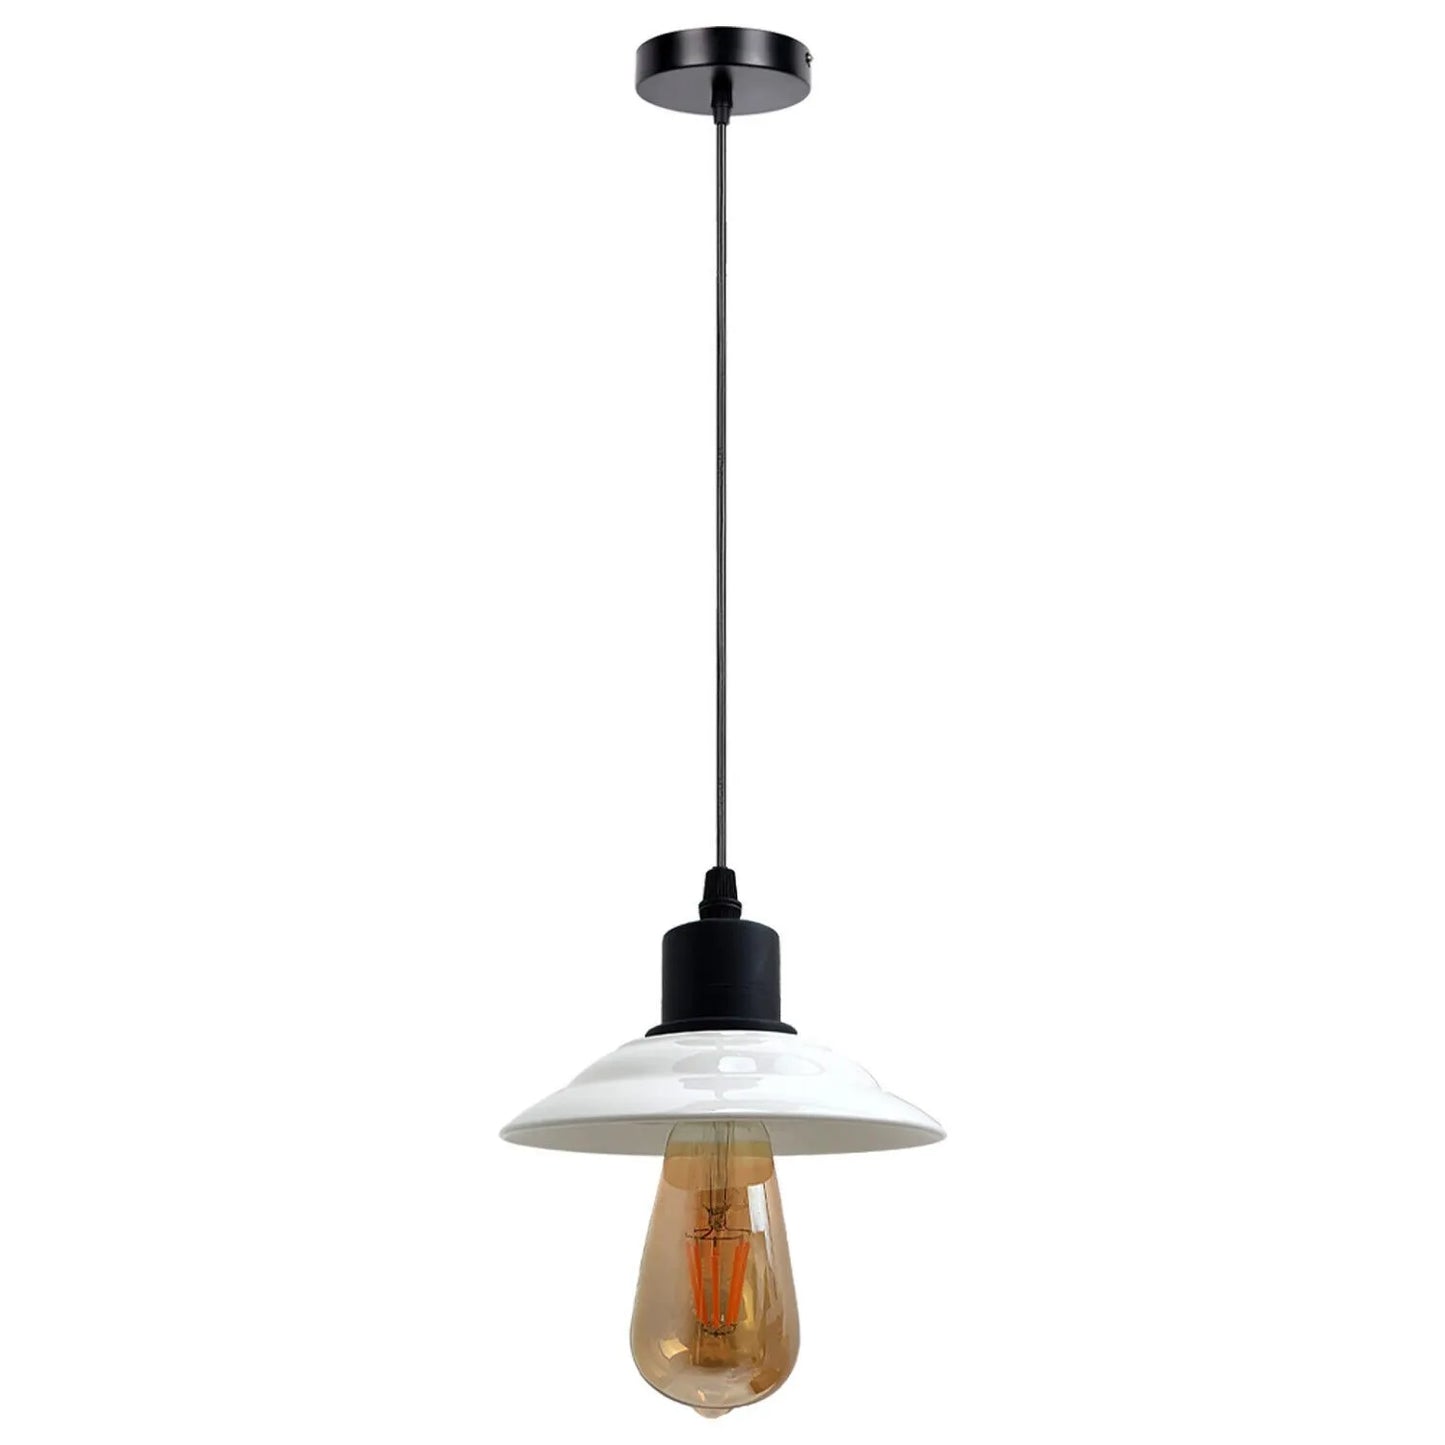 Ceramic Lamp Shade Cafe Hanging Ceiling Pendant Lighting